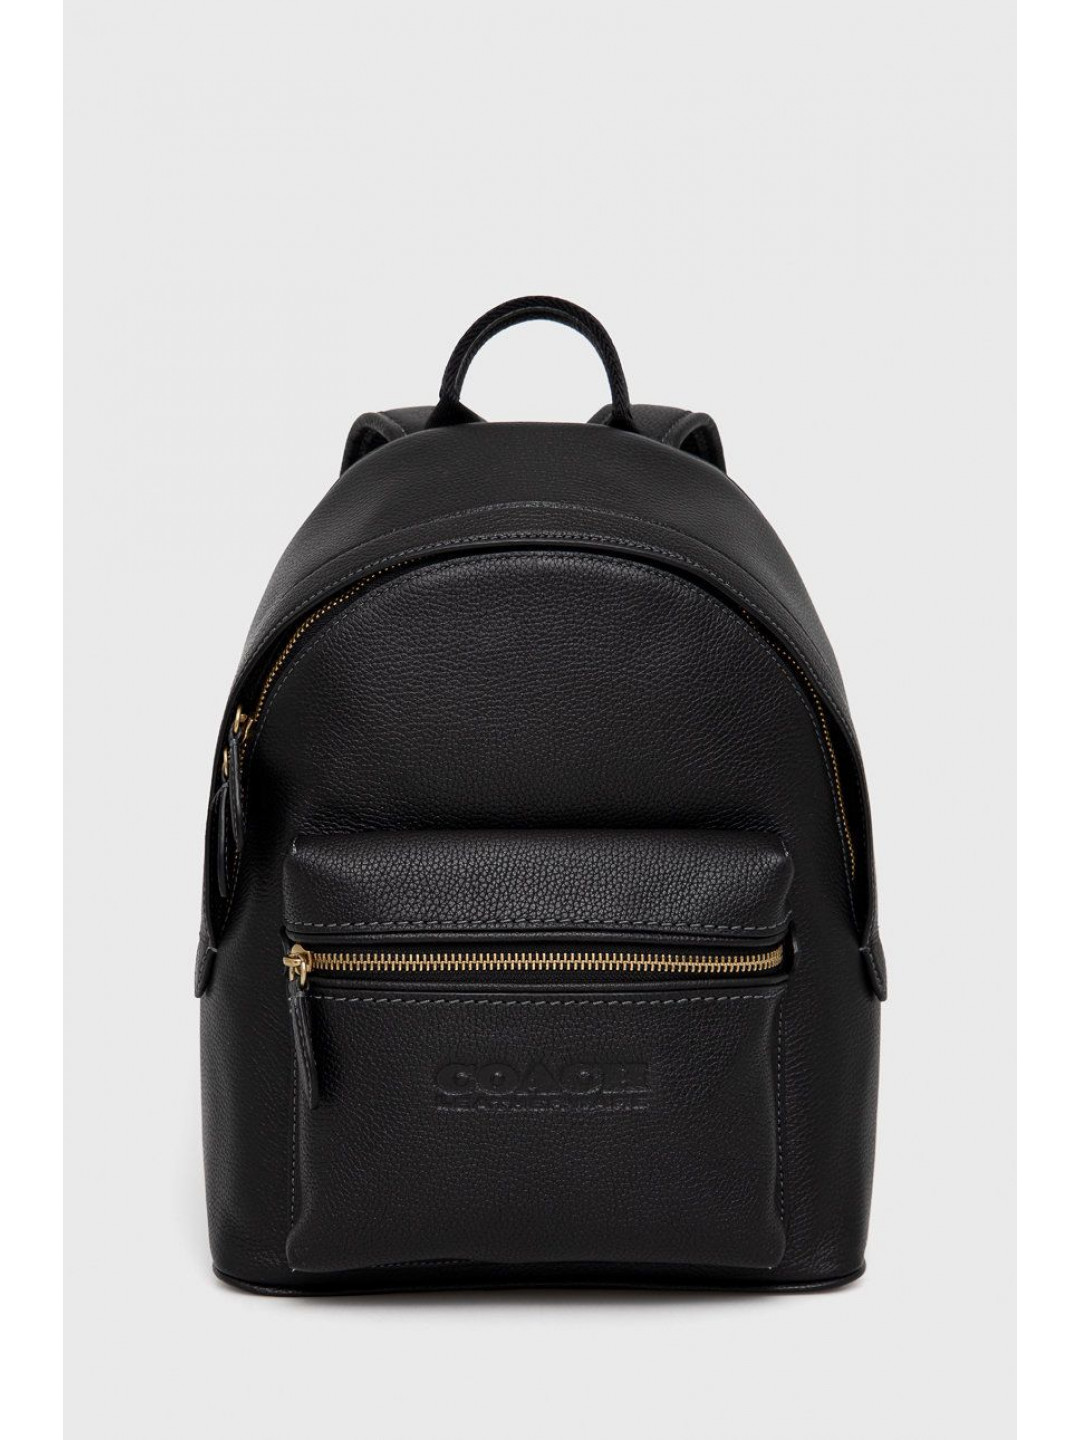 Kožený batoh Coach Charter Backpack 24 dámský černá barva malý hladký